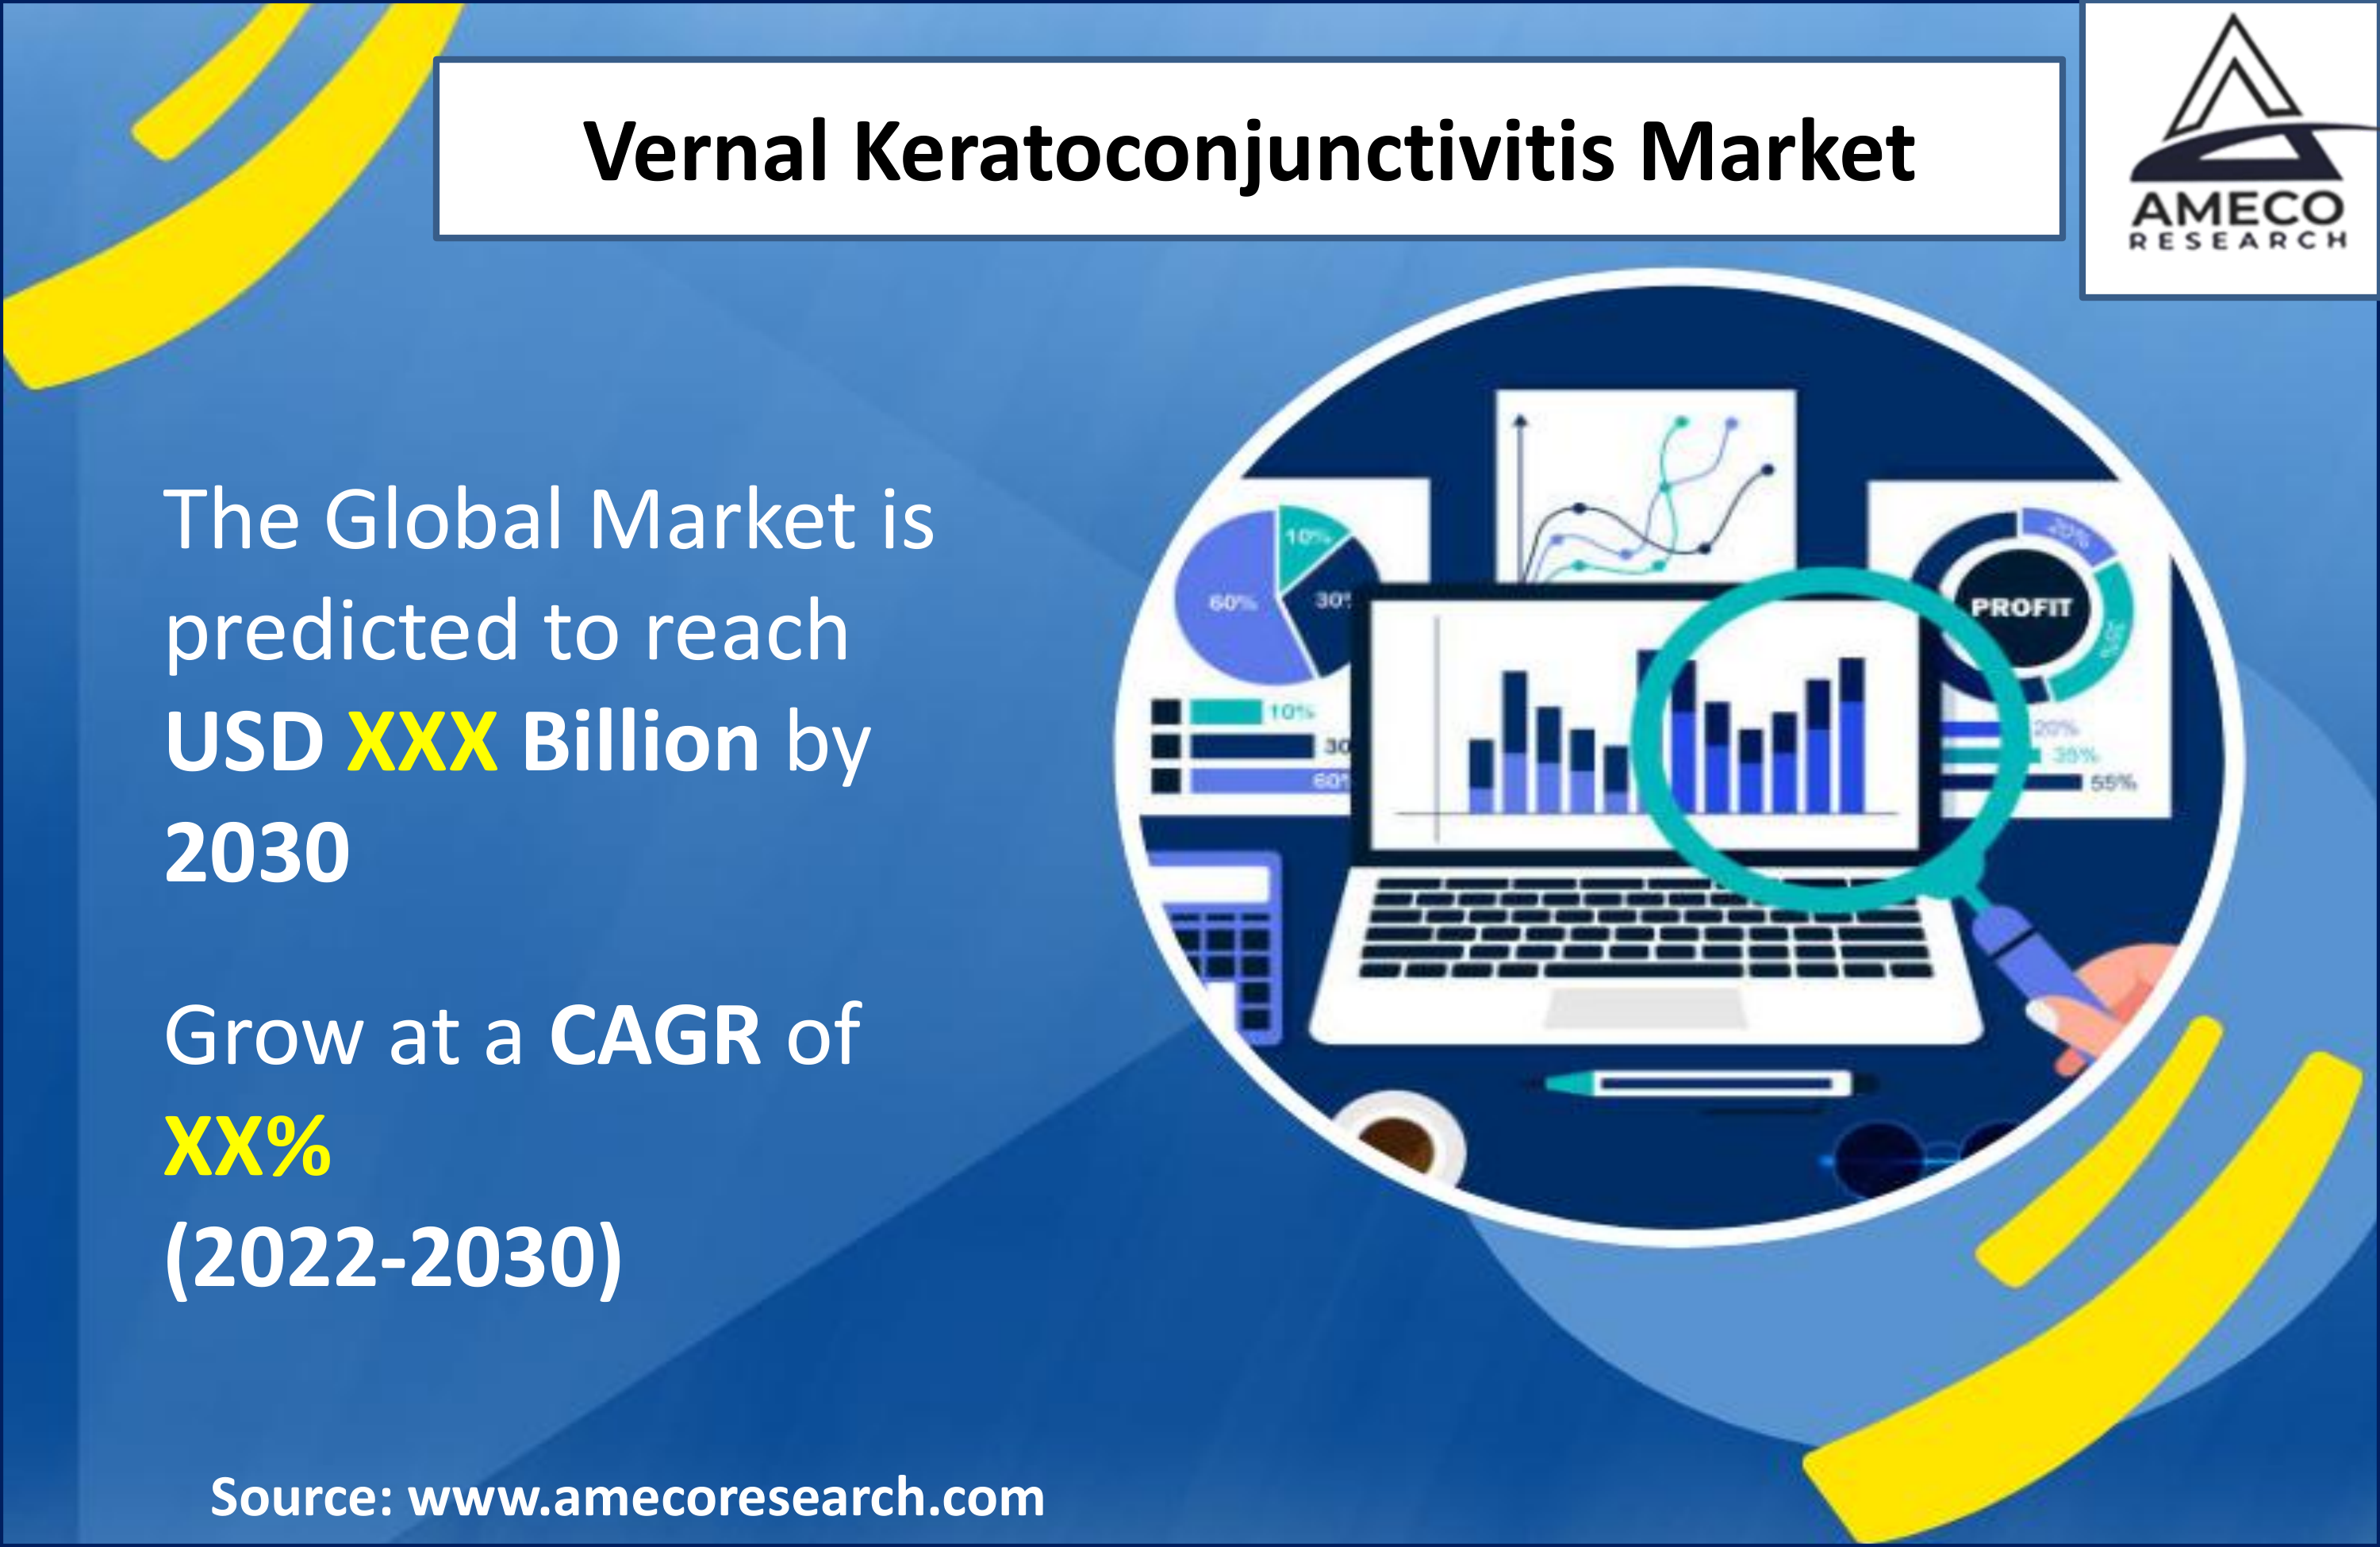 Vernal Keratoconjunctivitis Market